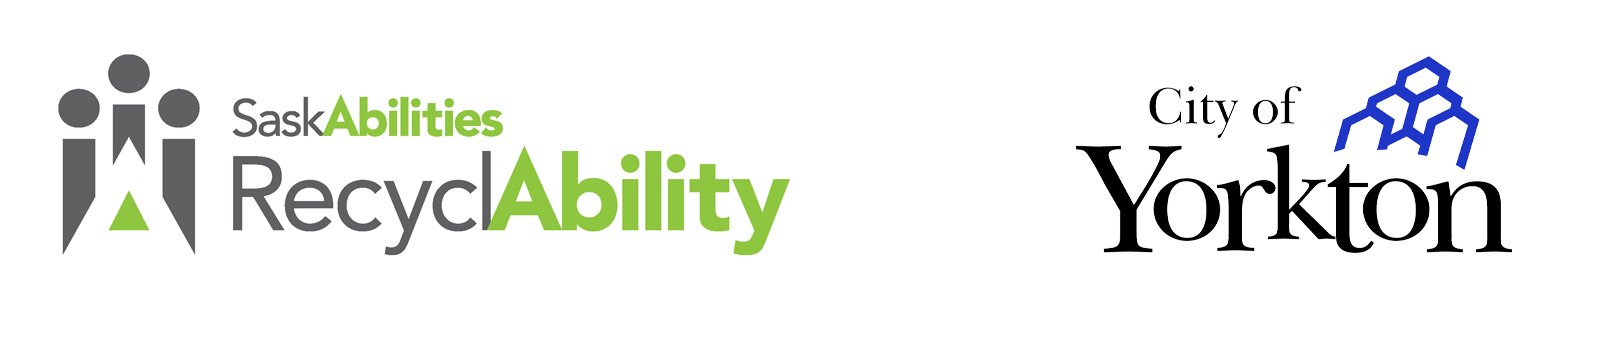 RecyclAbility & City of Yorkton Logos